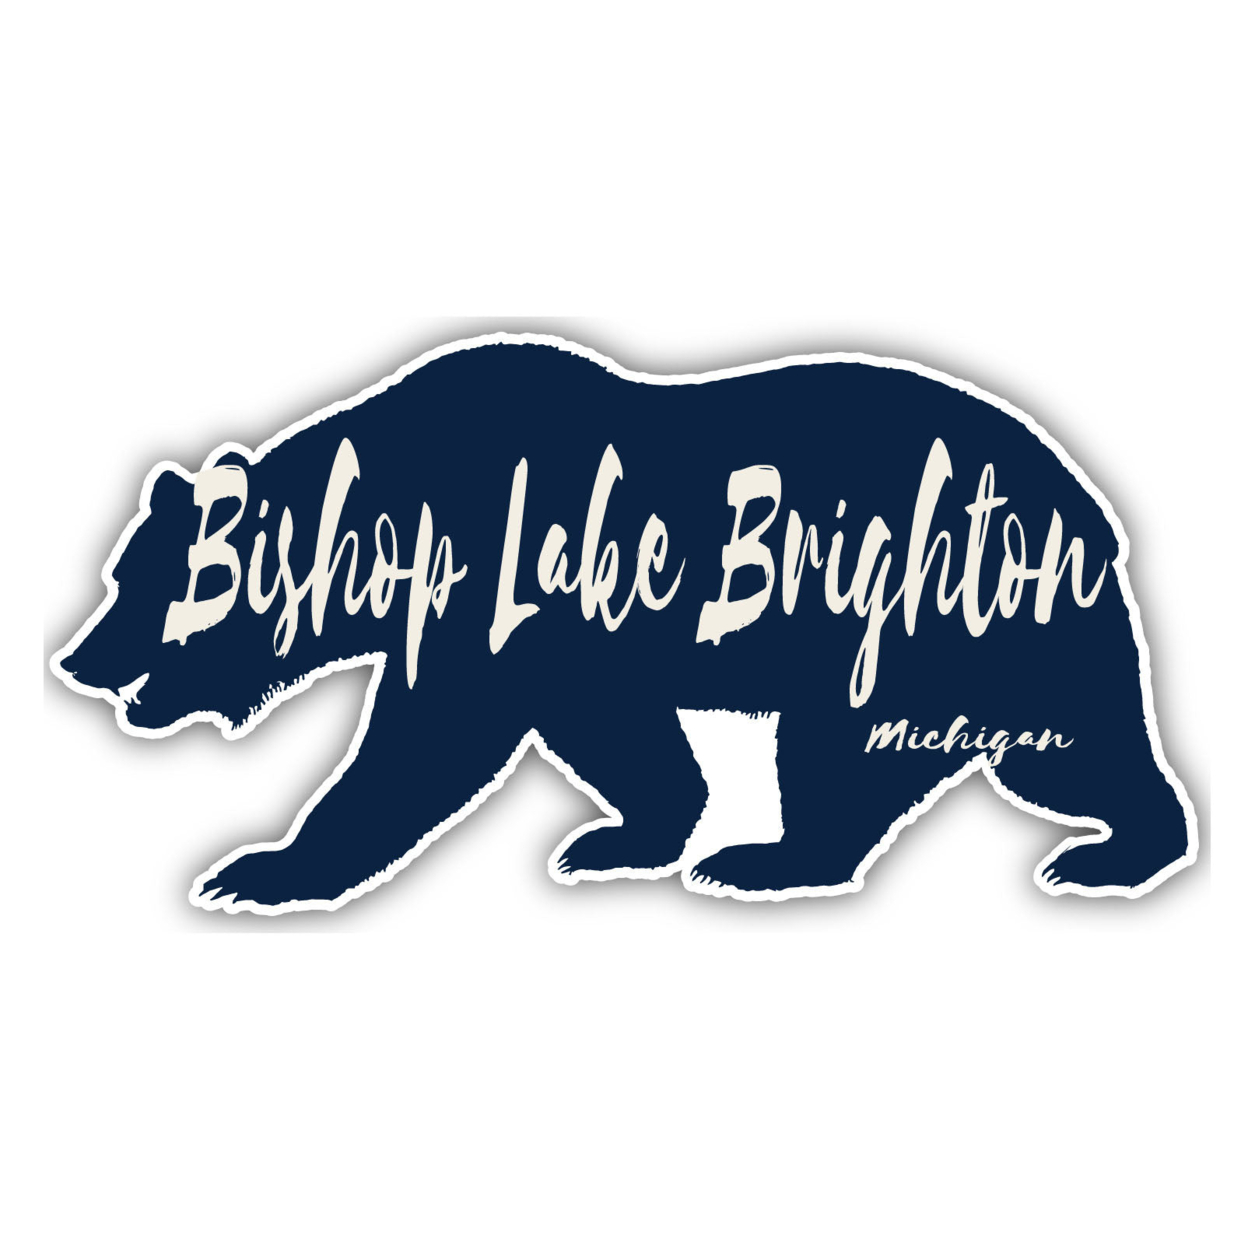 Bishop Lake Brighton Michigan Souvenir Decorative Stickers (Choose Theme And Size) - Single Unit, 10-Inch, Bear